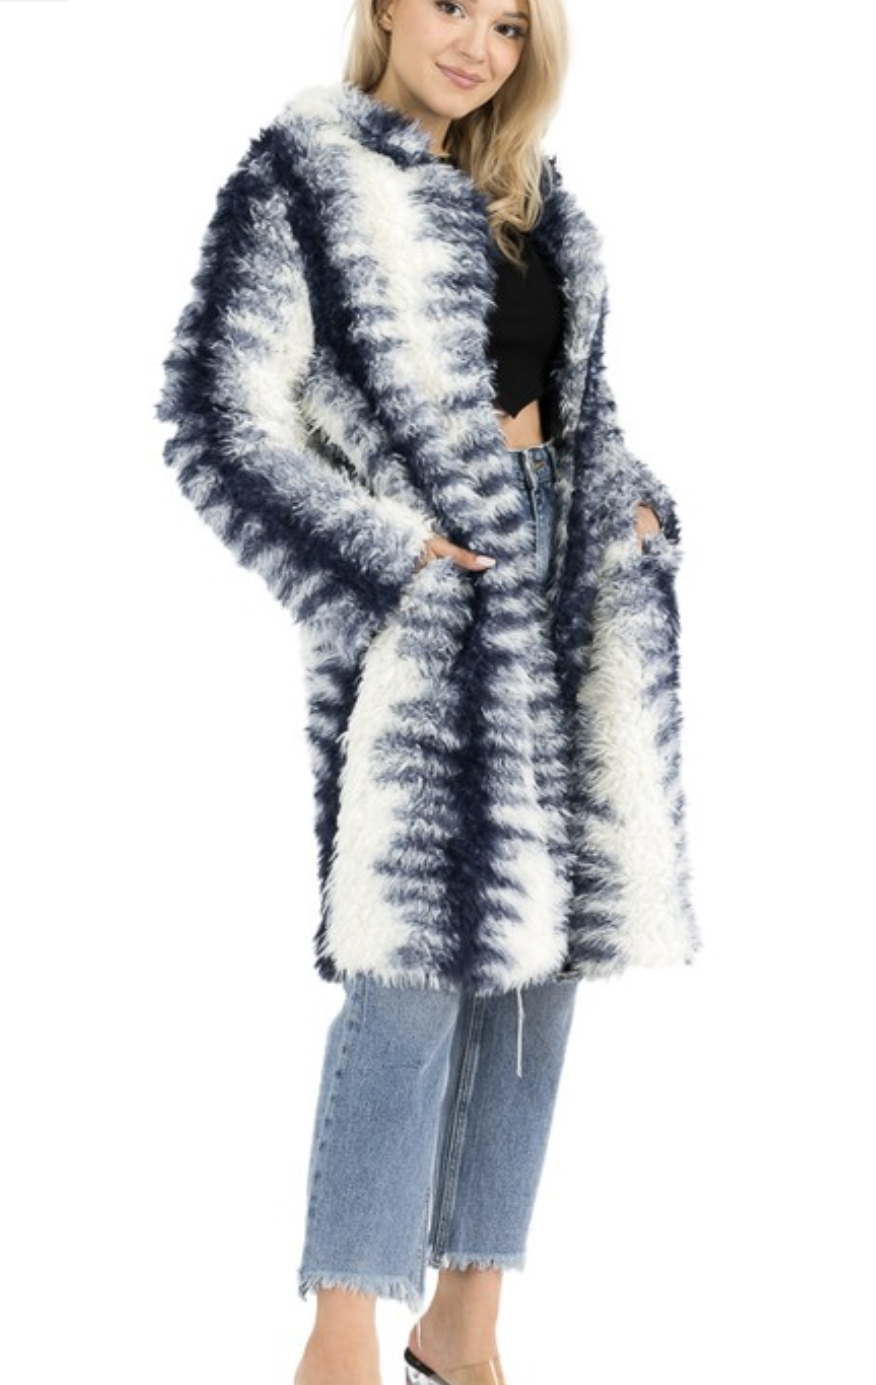 Jenny's Fur Coat